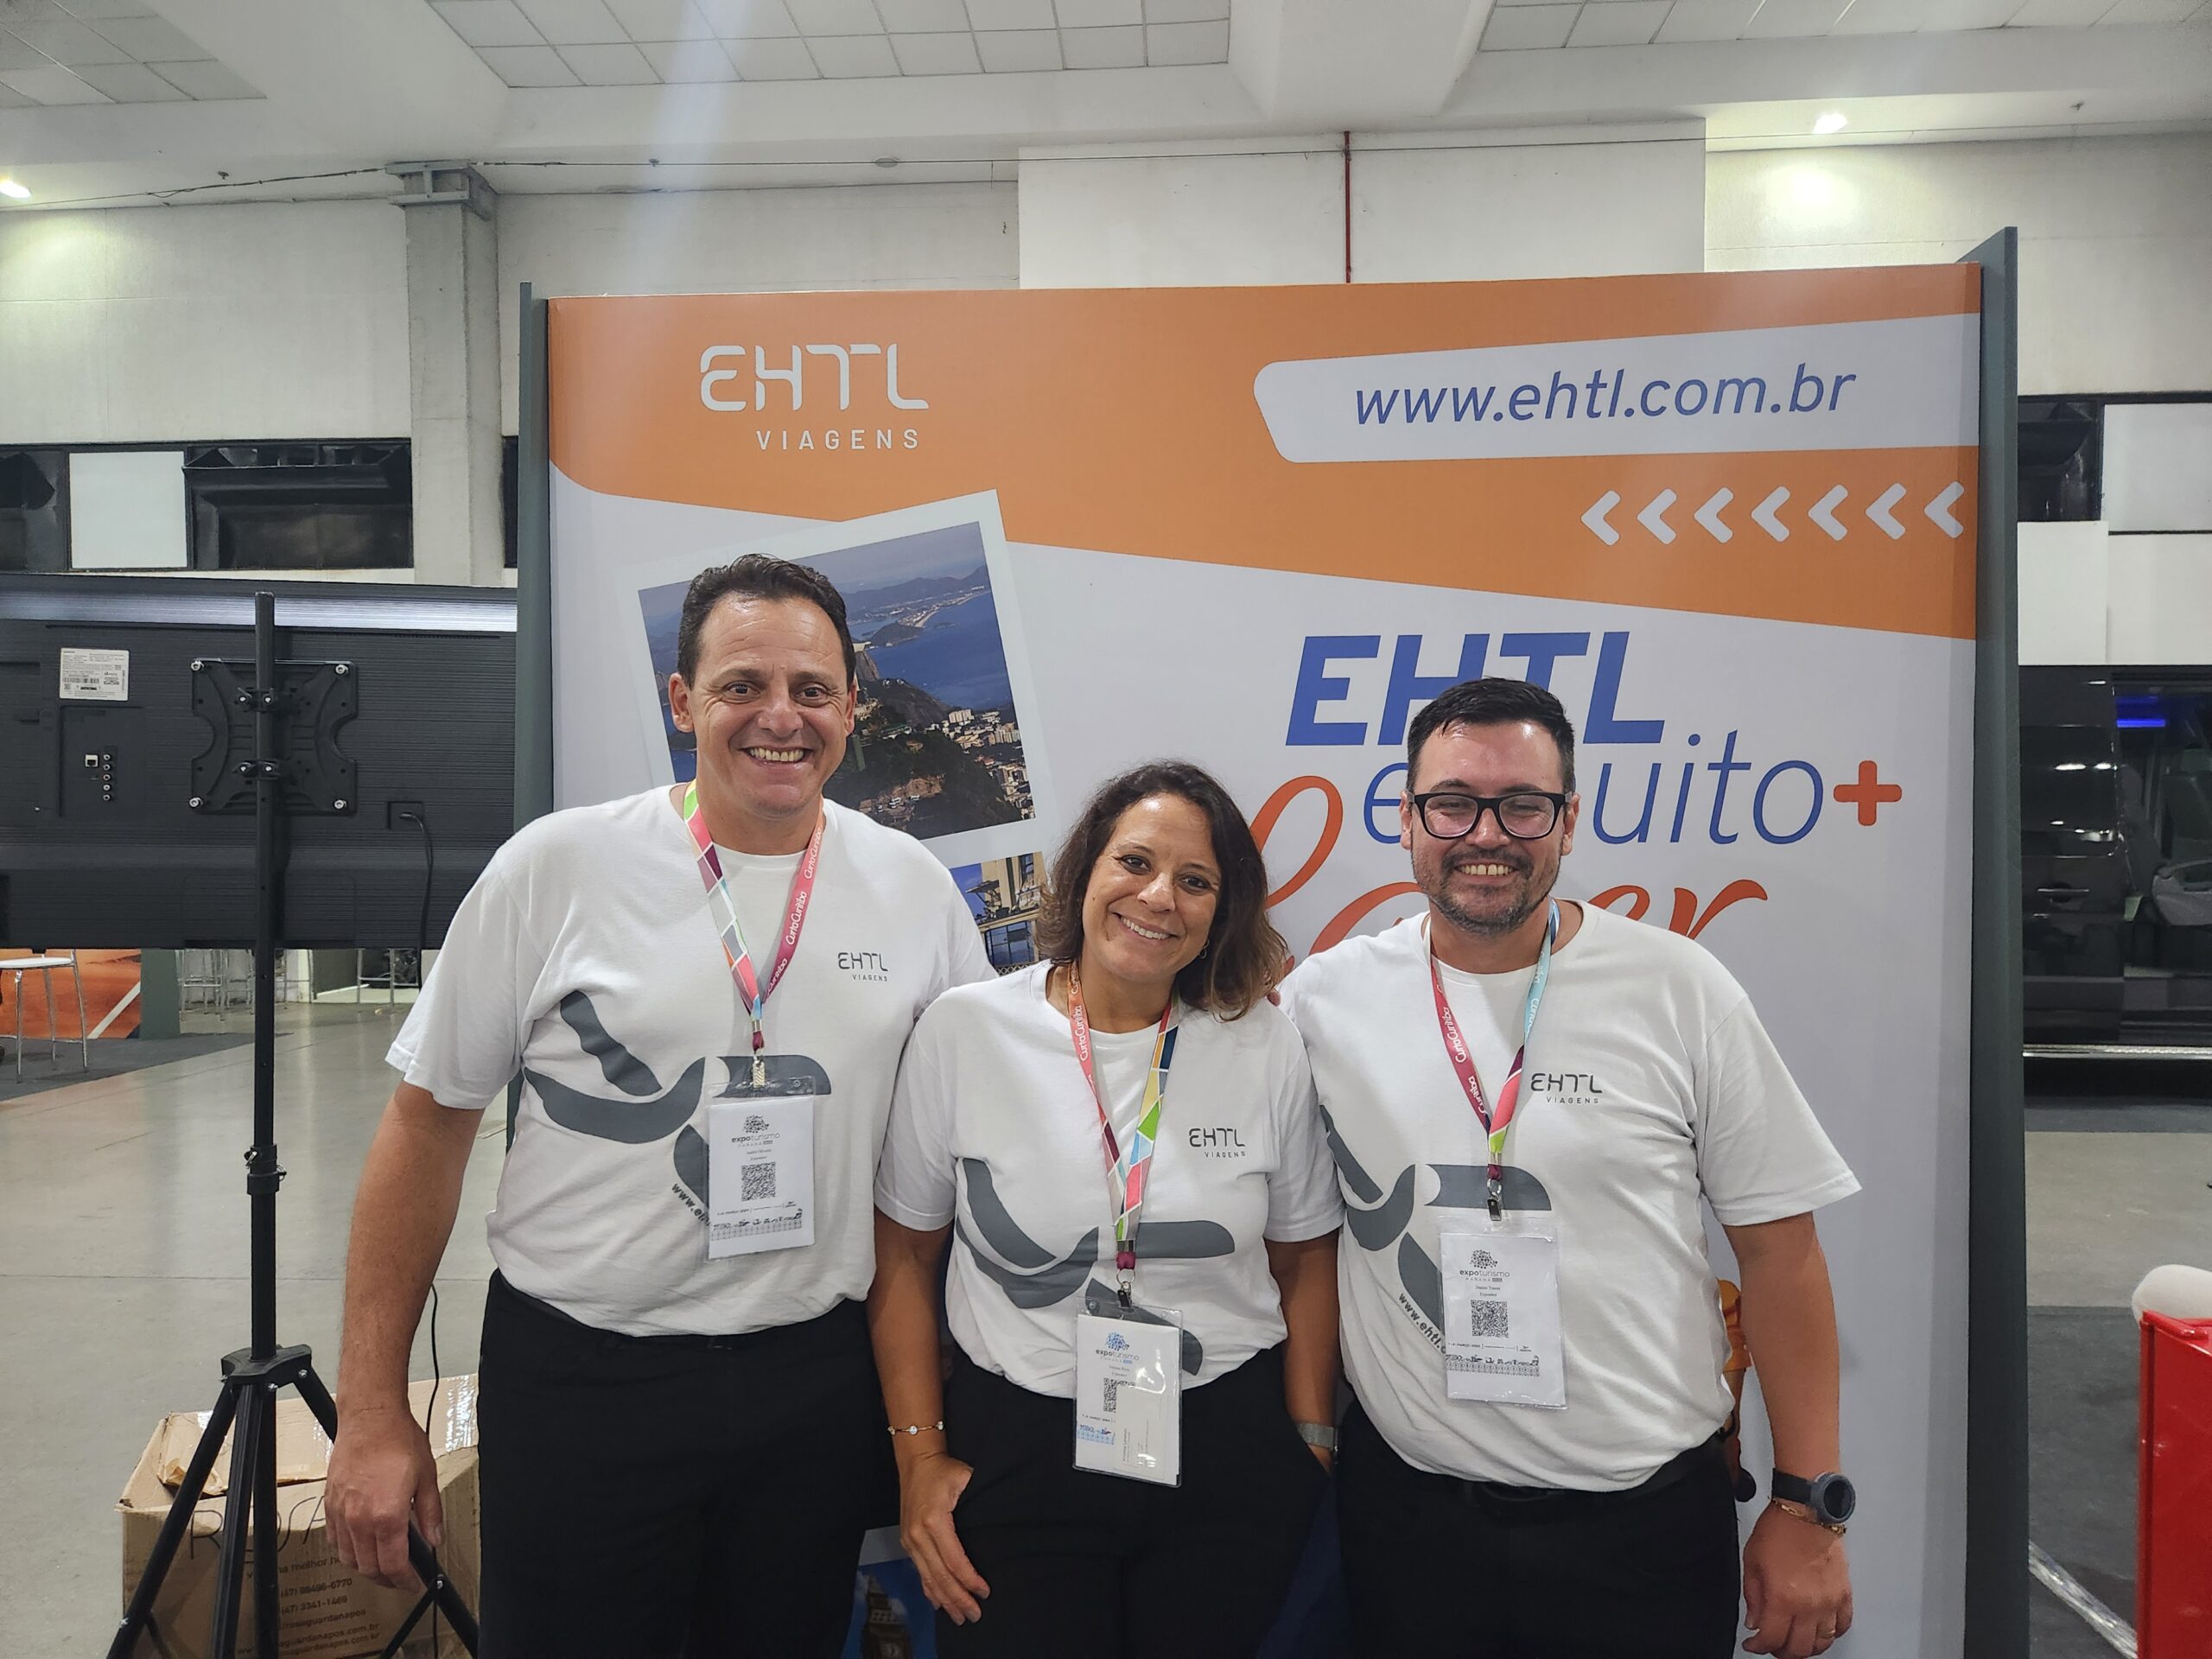 André Oliveira, Simone Ricio e Danilo Serrano, EHTL Viage